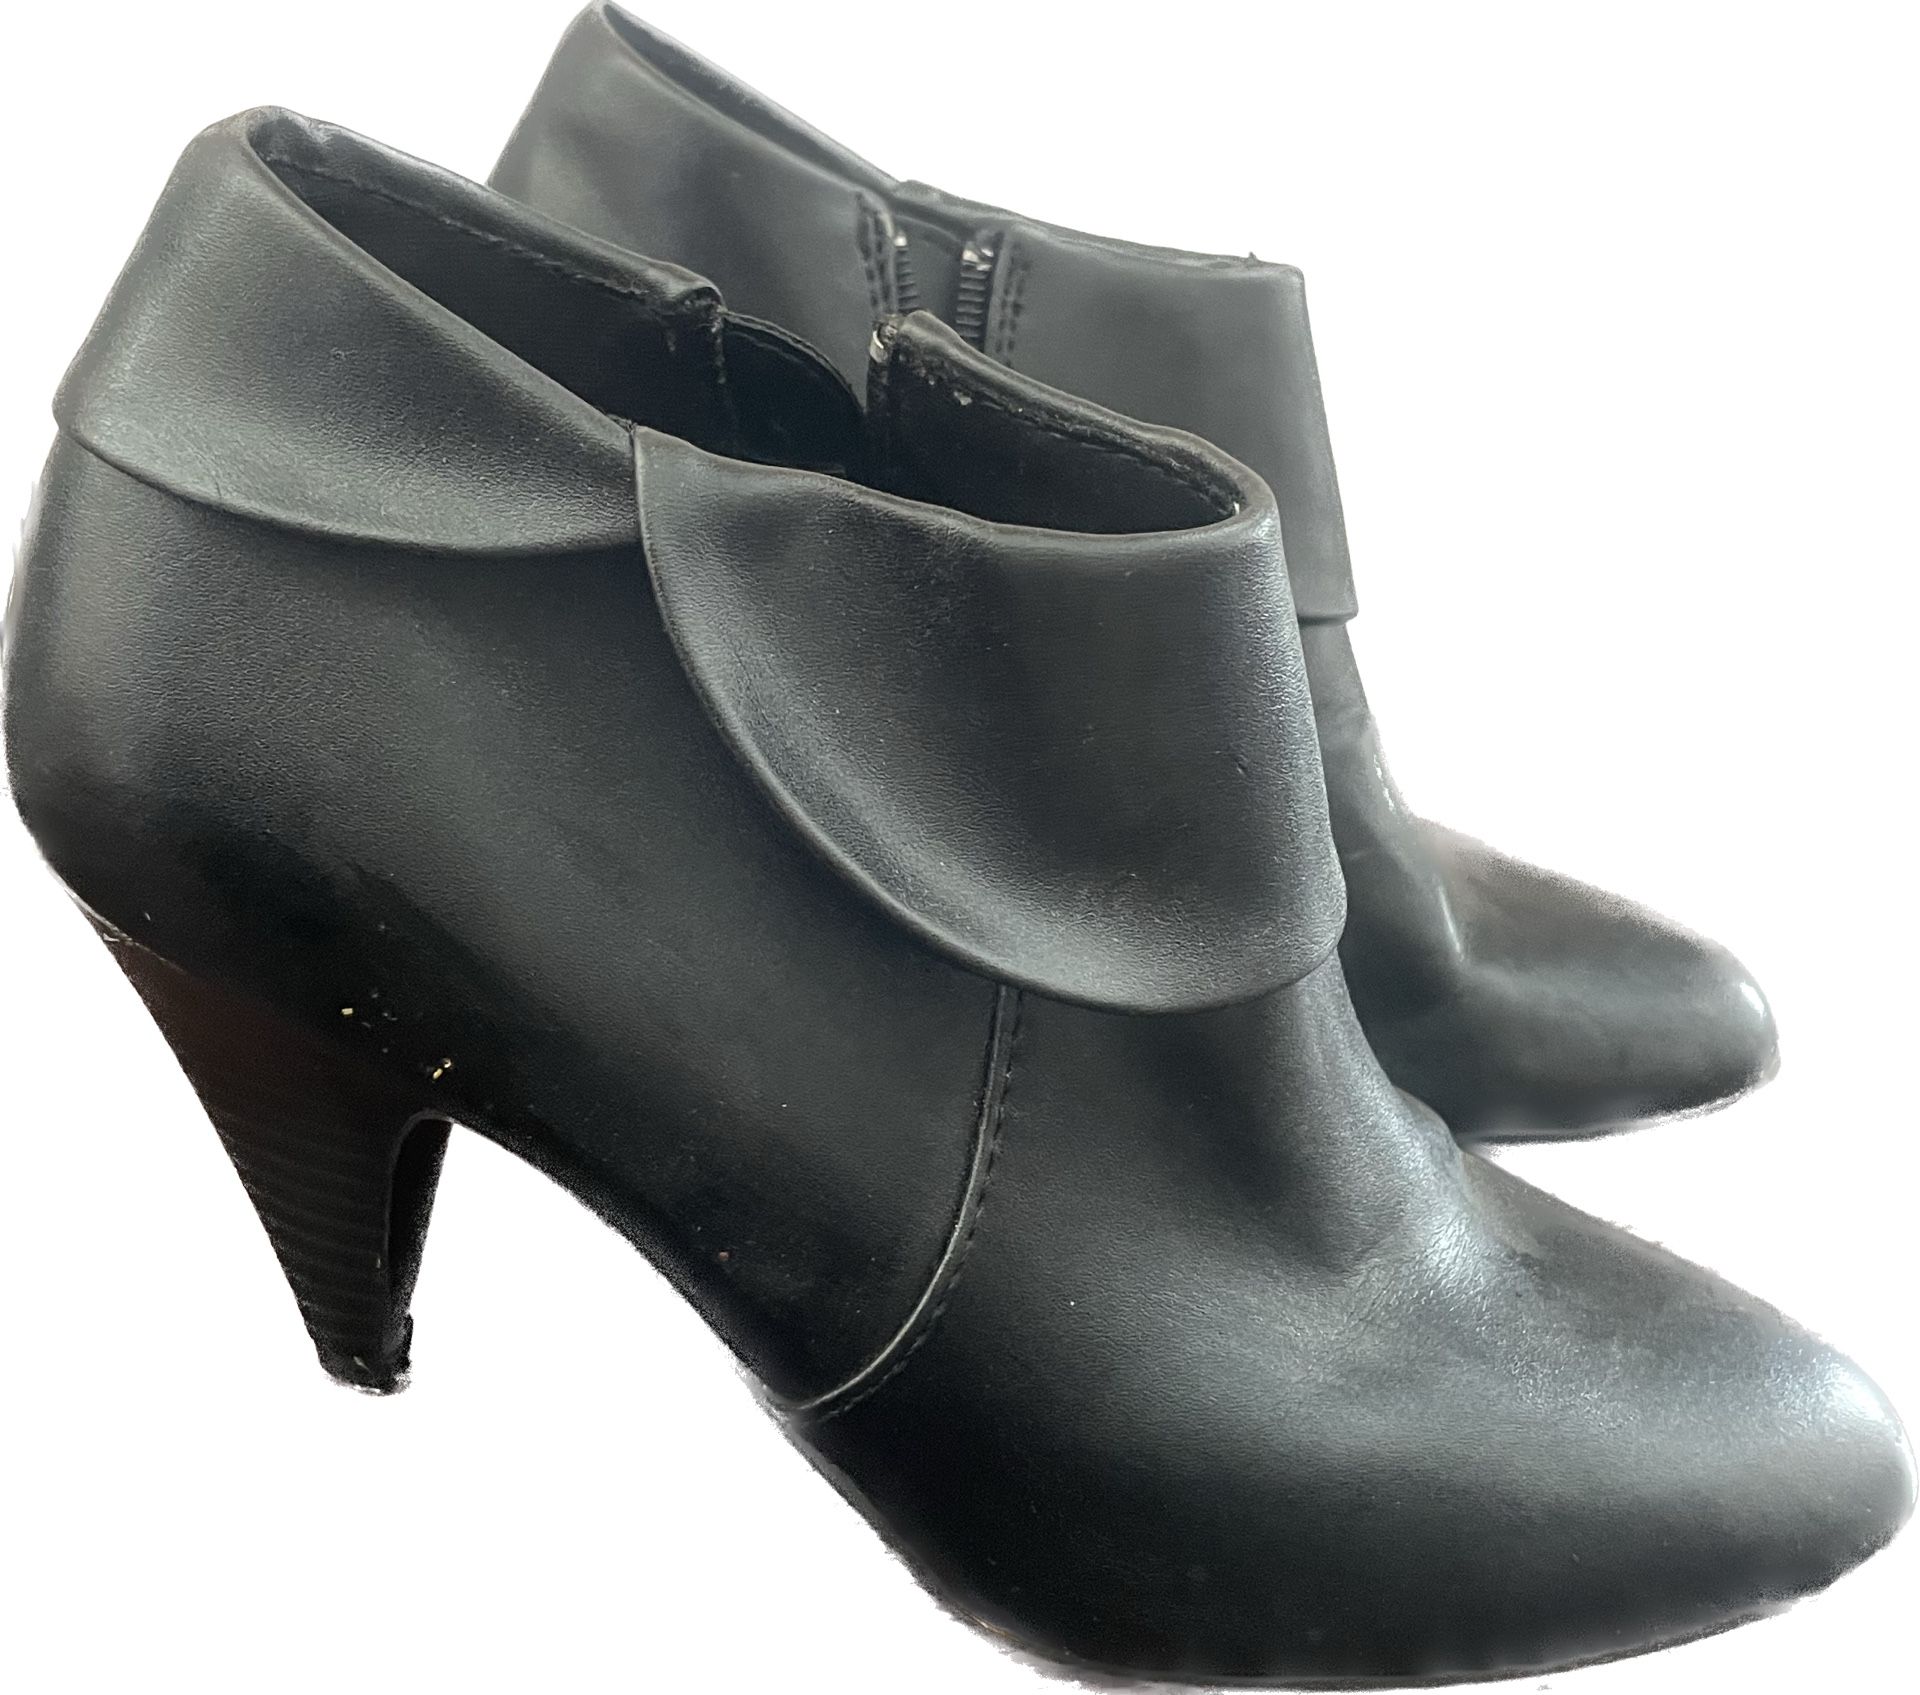 Low Heel Black Boots Size 7.5